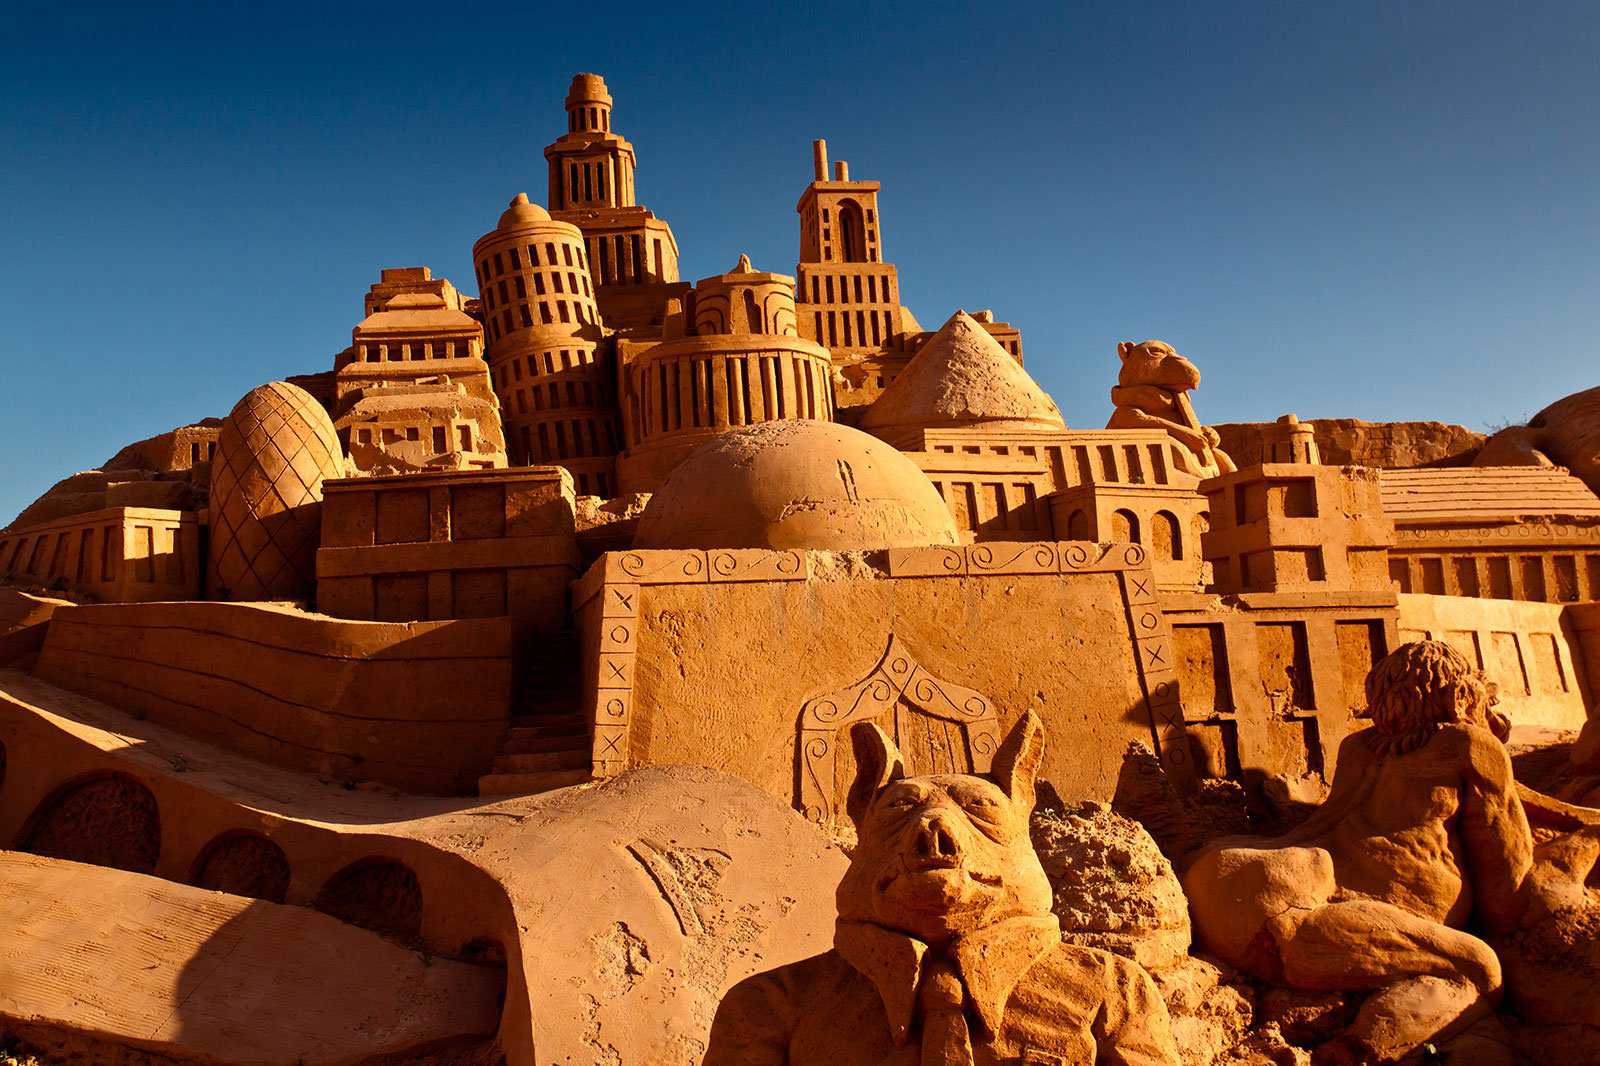 Sand sculptures at Sand Nativity